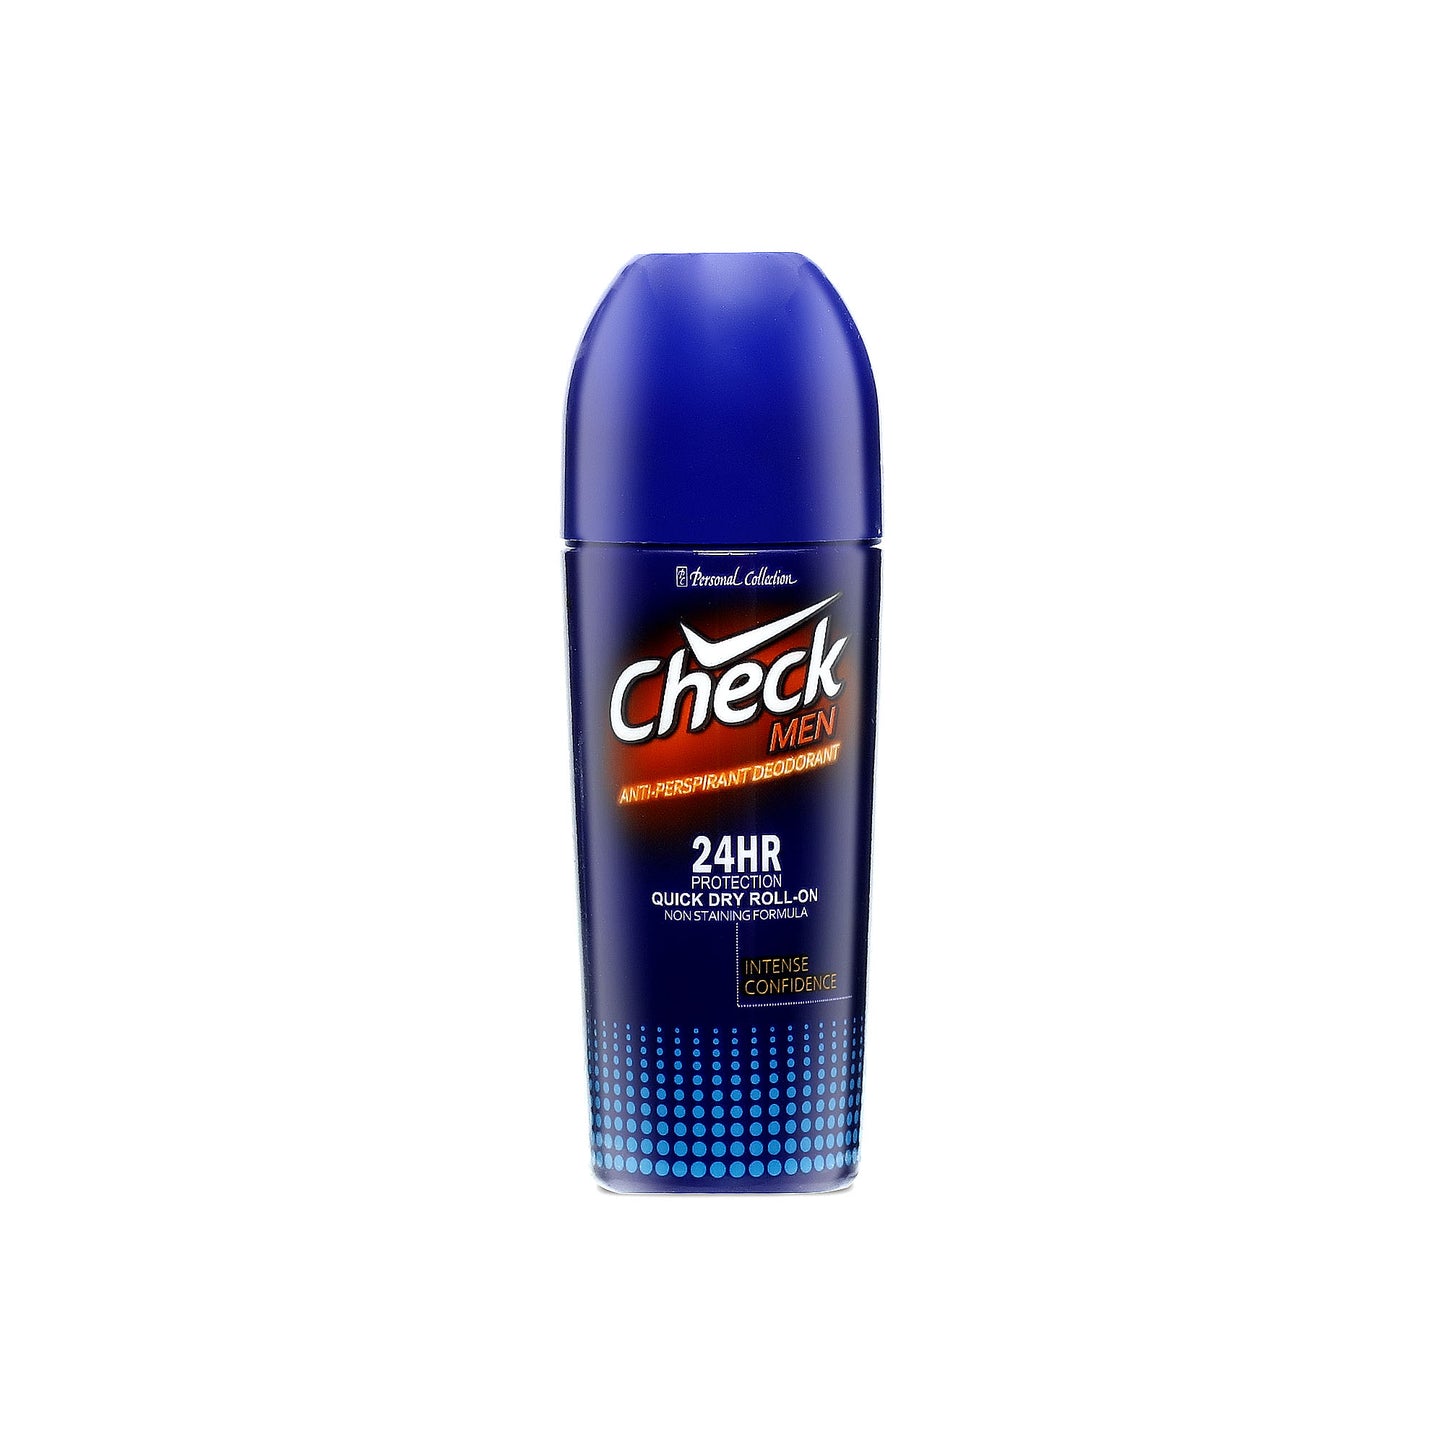 Check Anti-perspirant Deodorant for Men